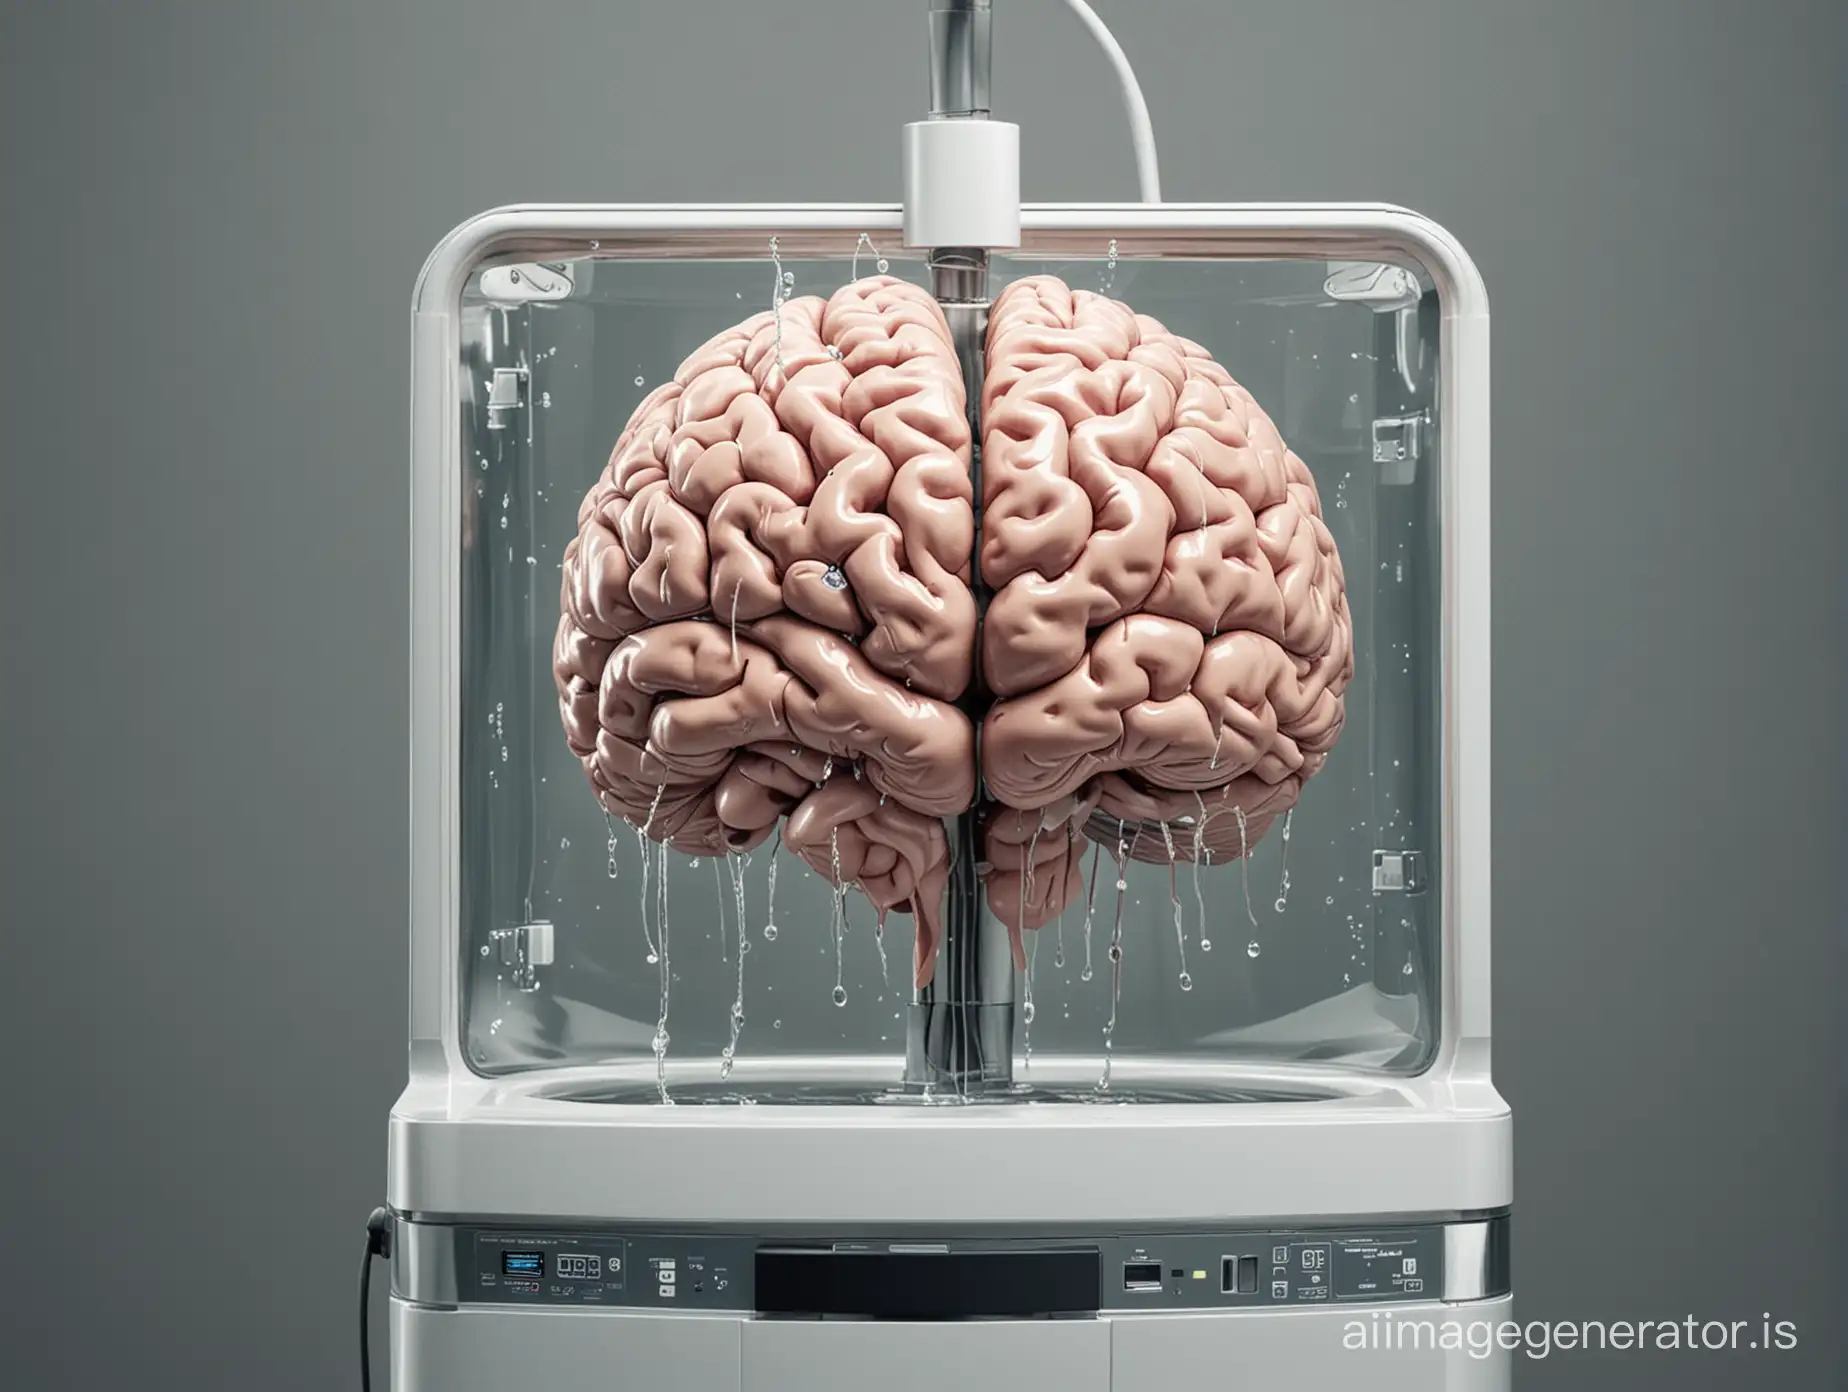 A brain washing machine